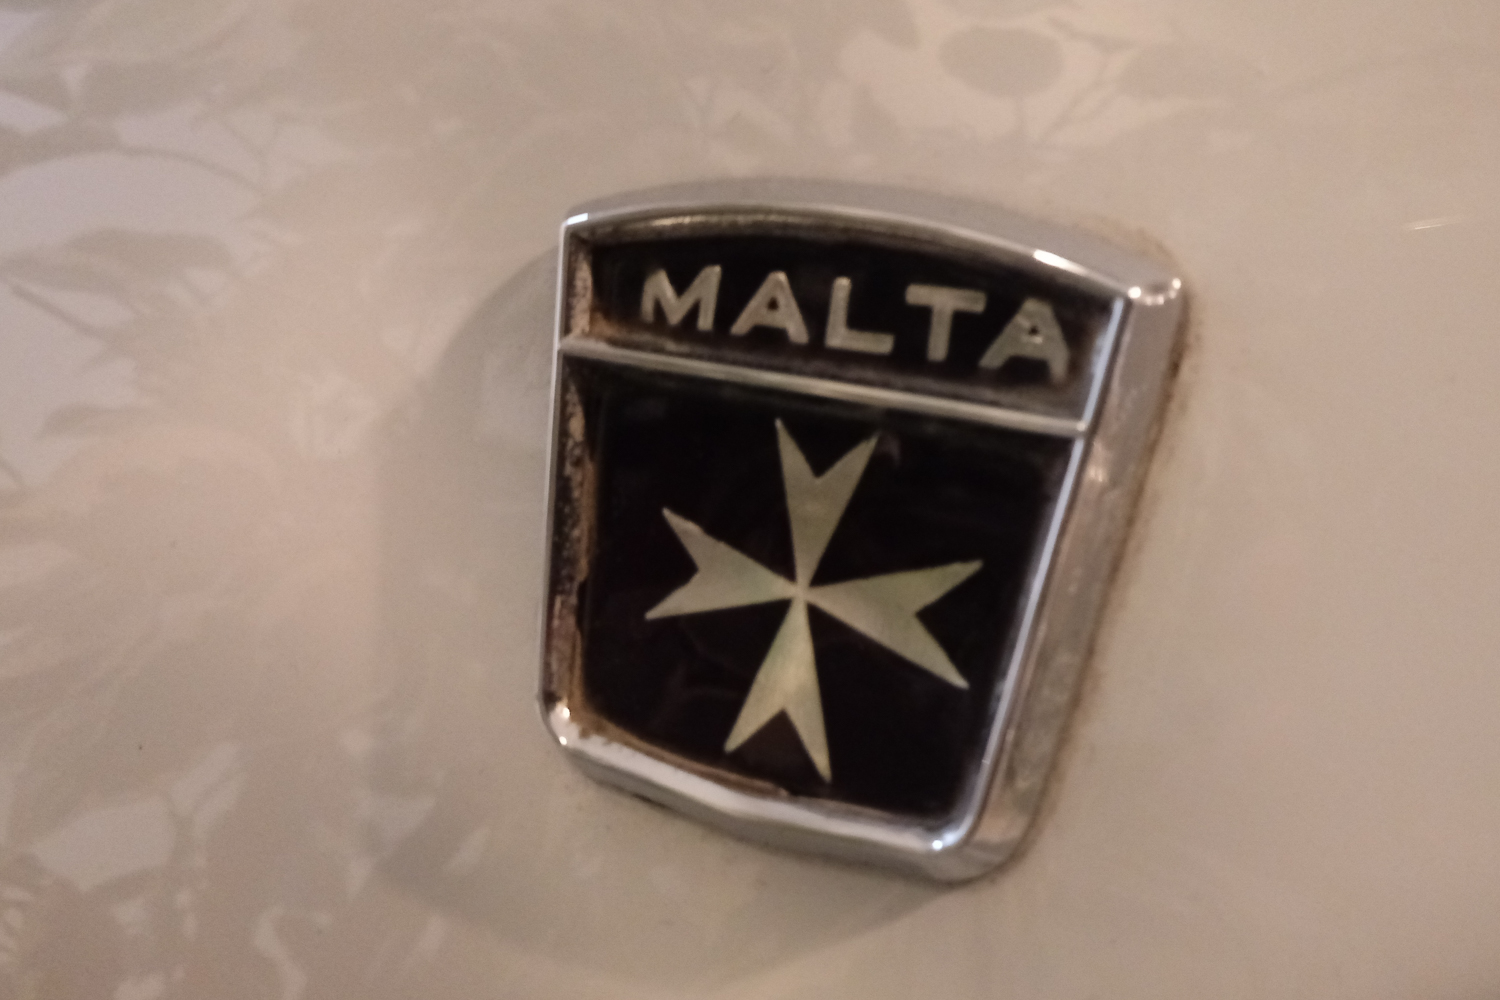 Malta Classic car Expedition